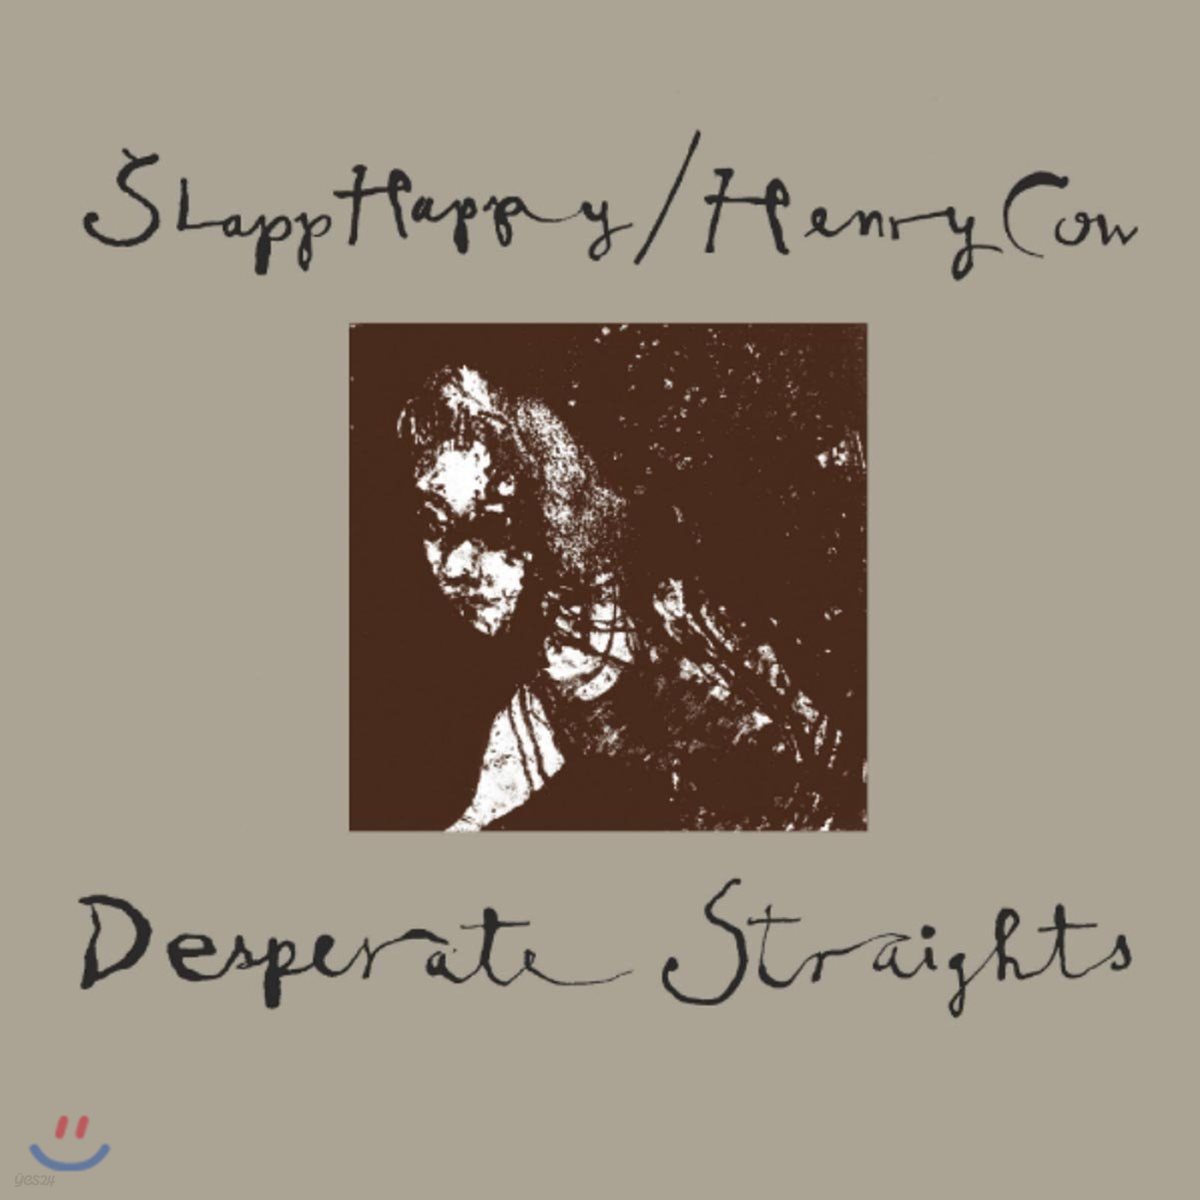 Slapp Happy &amp; Henry Cow (슬랩 해피 &amp; 헨리 카우) - Desperate Straights [LP]